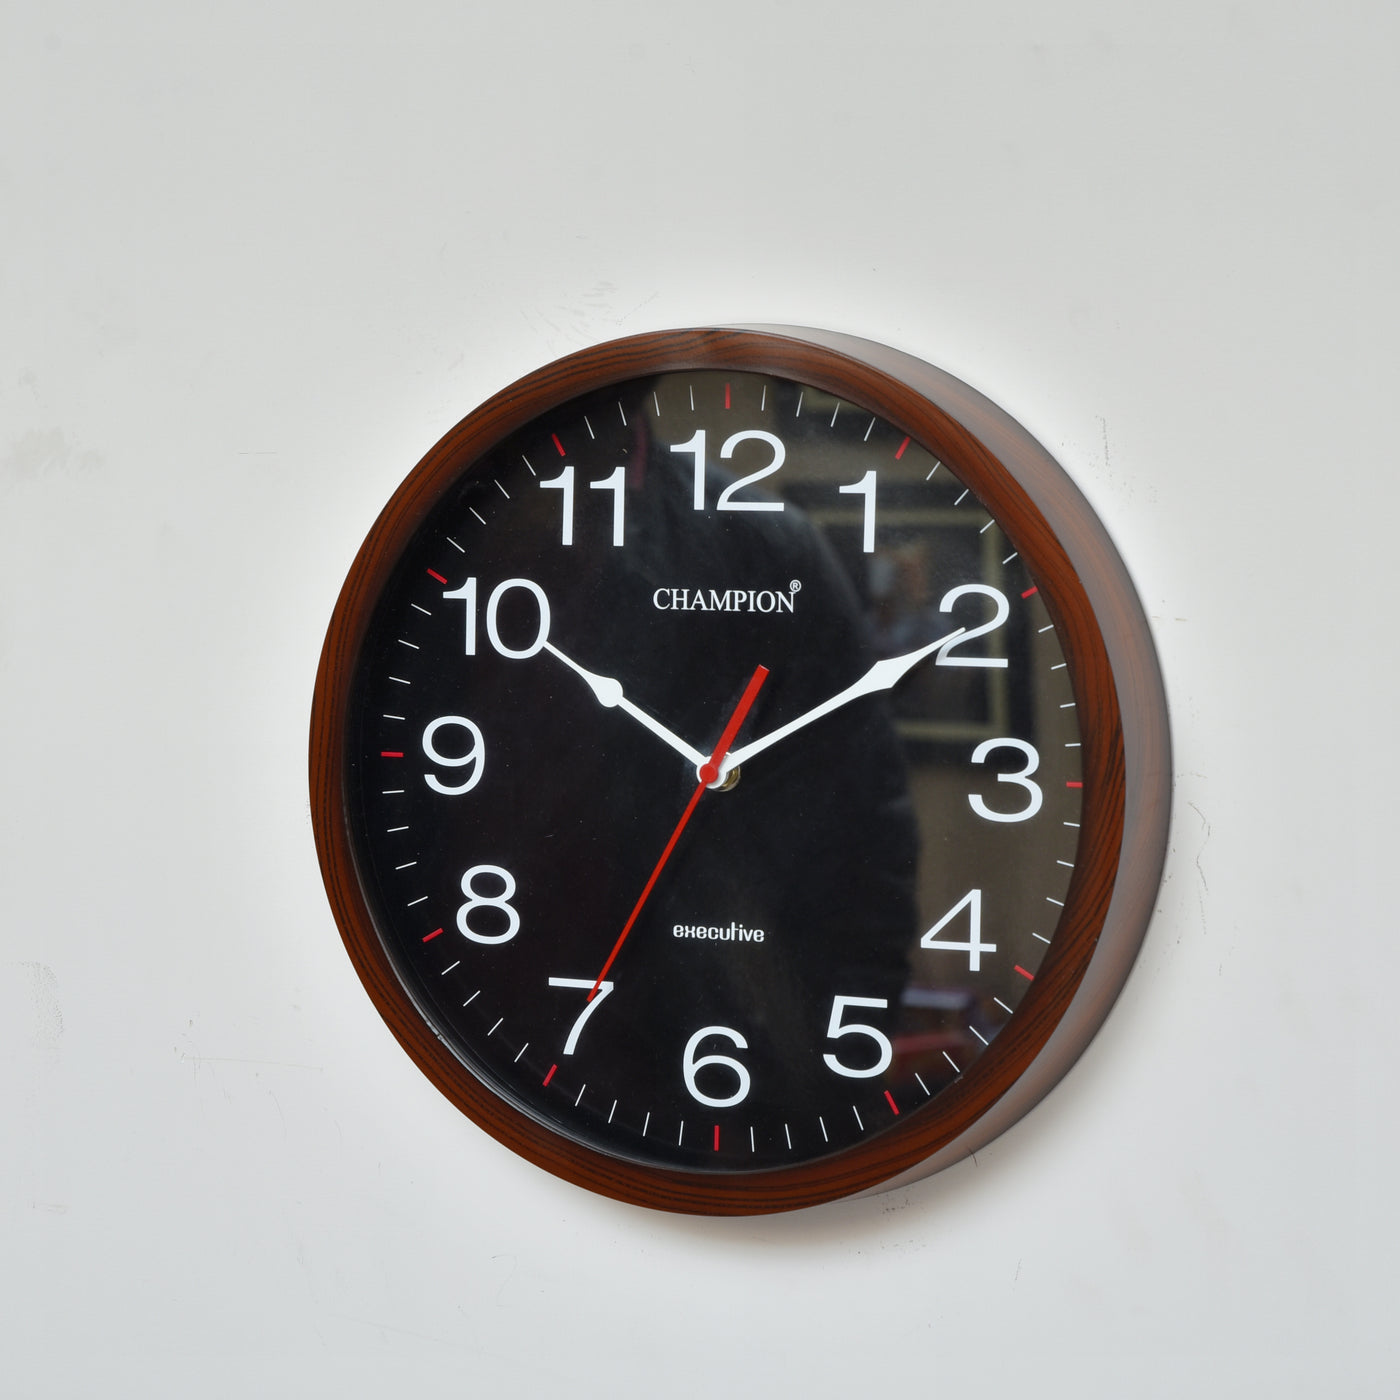 Champion Wood brown Wall Clock